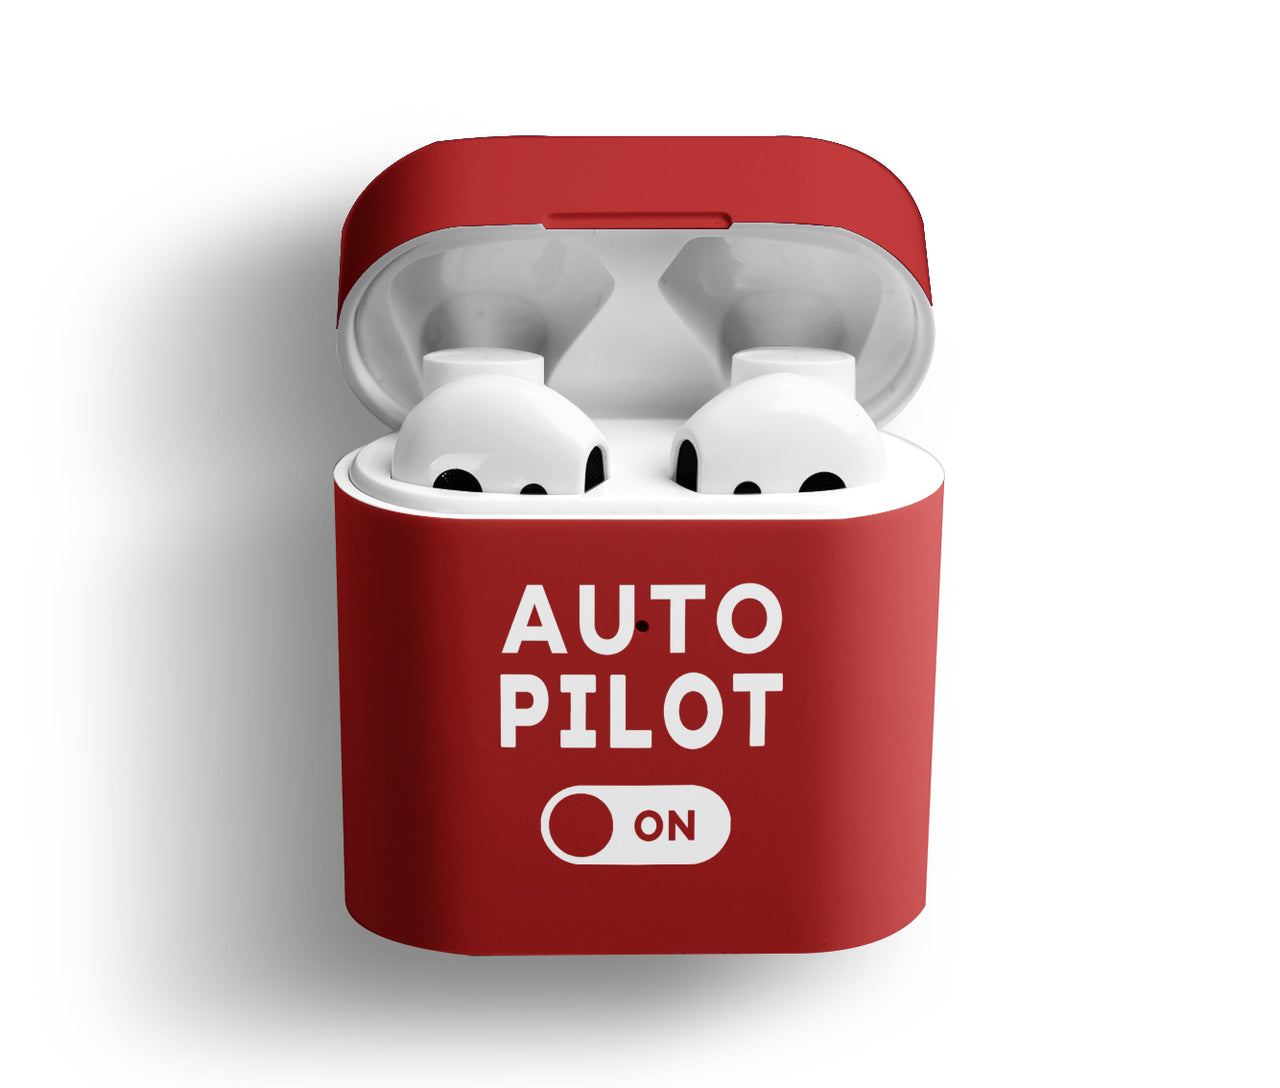 Auto Pilot ON Designed AirPods Cases